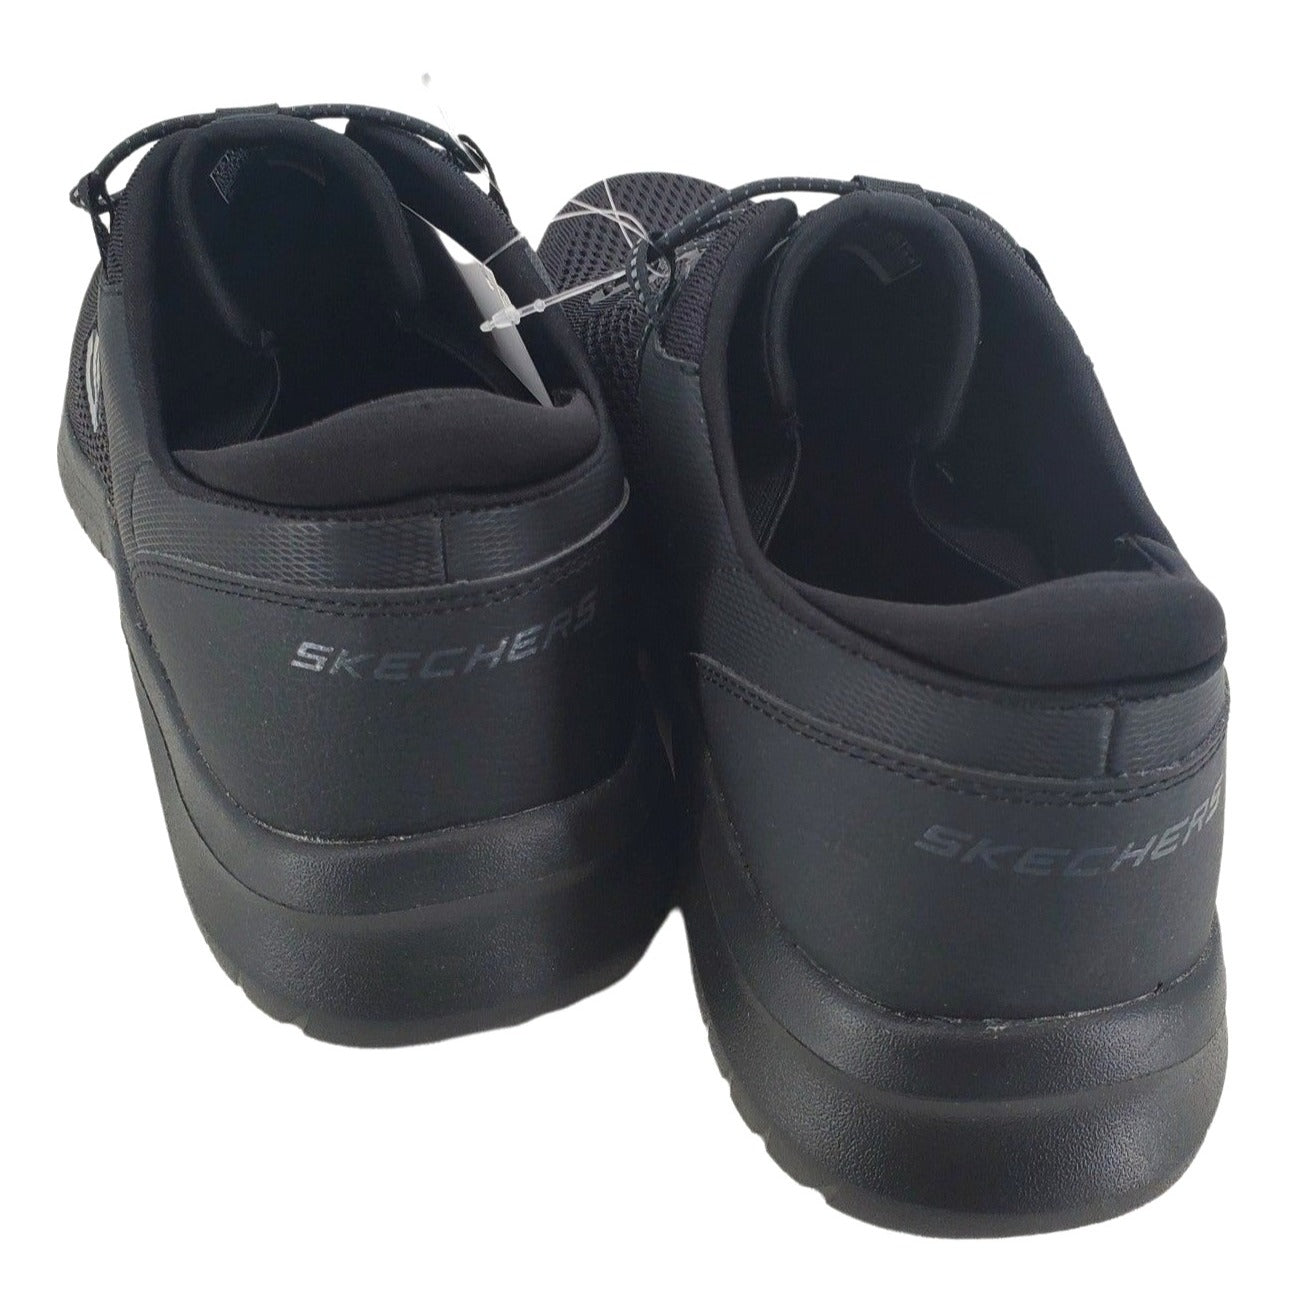 SKECHERS Sneakers Men's Bounders Memory Foam Mesh Knit Athletic shoes